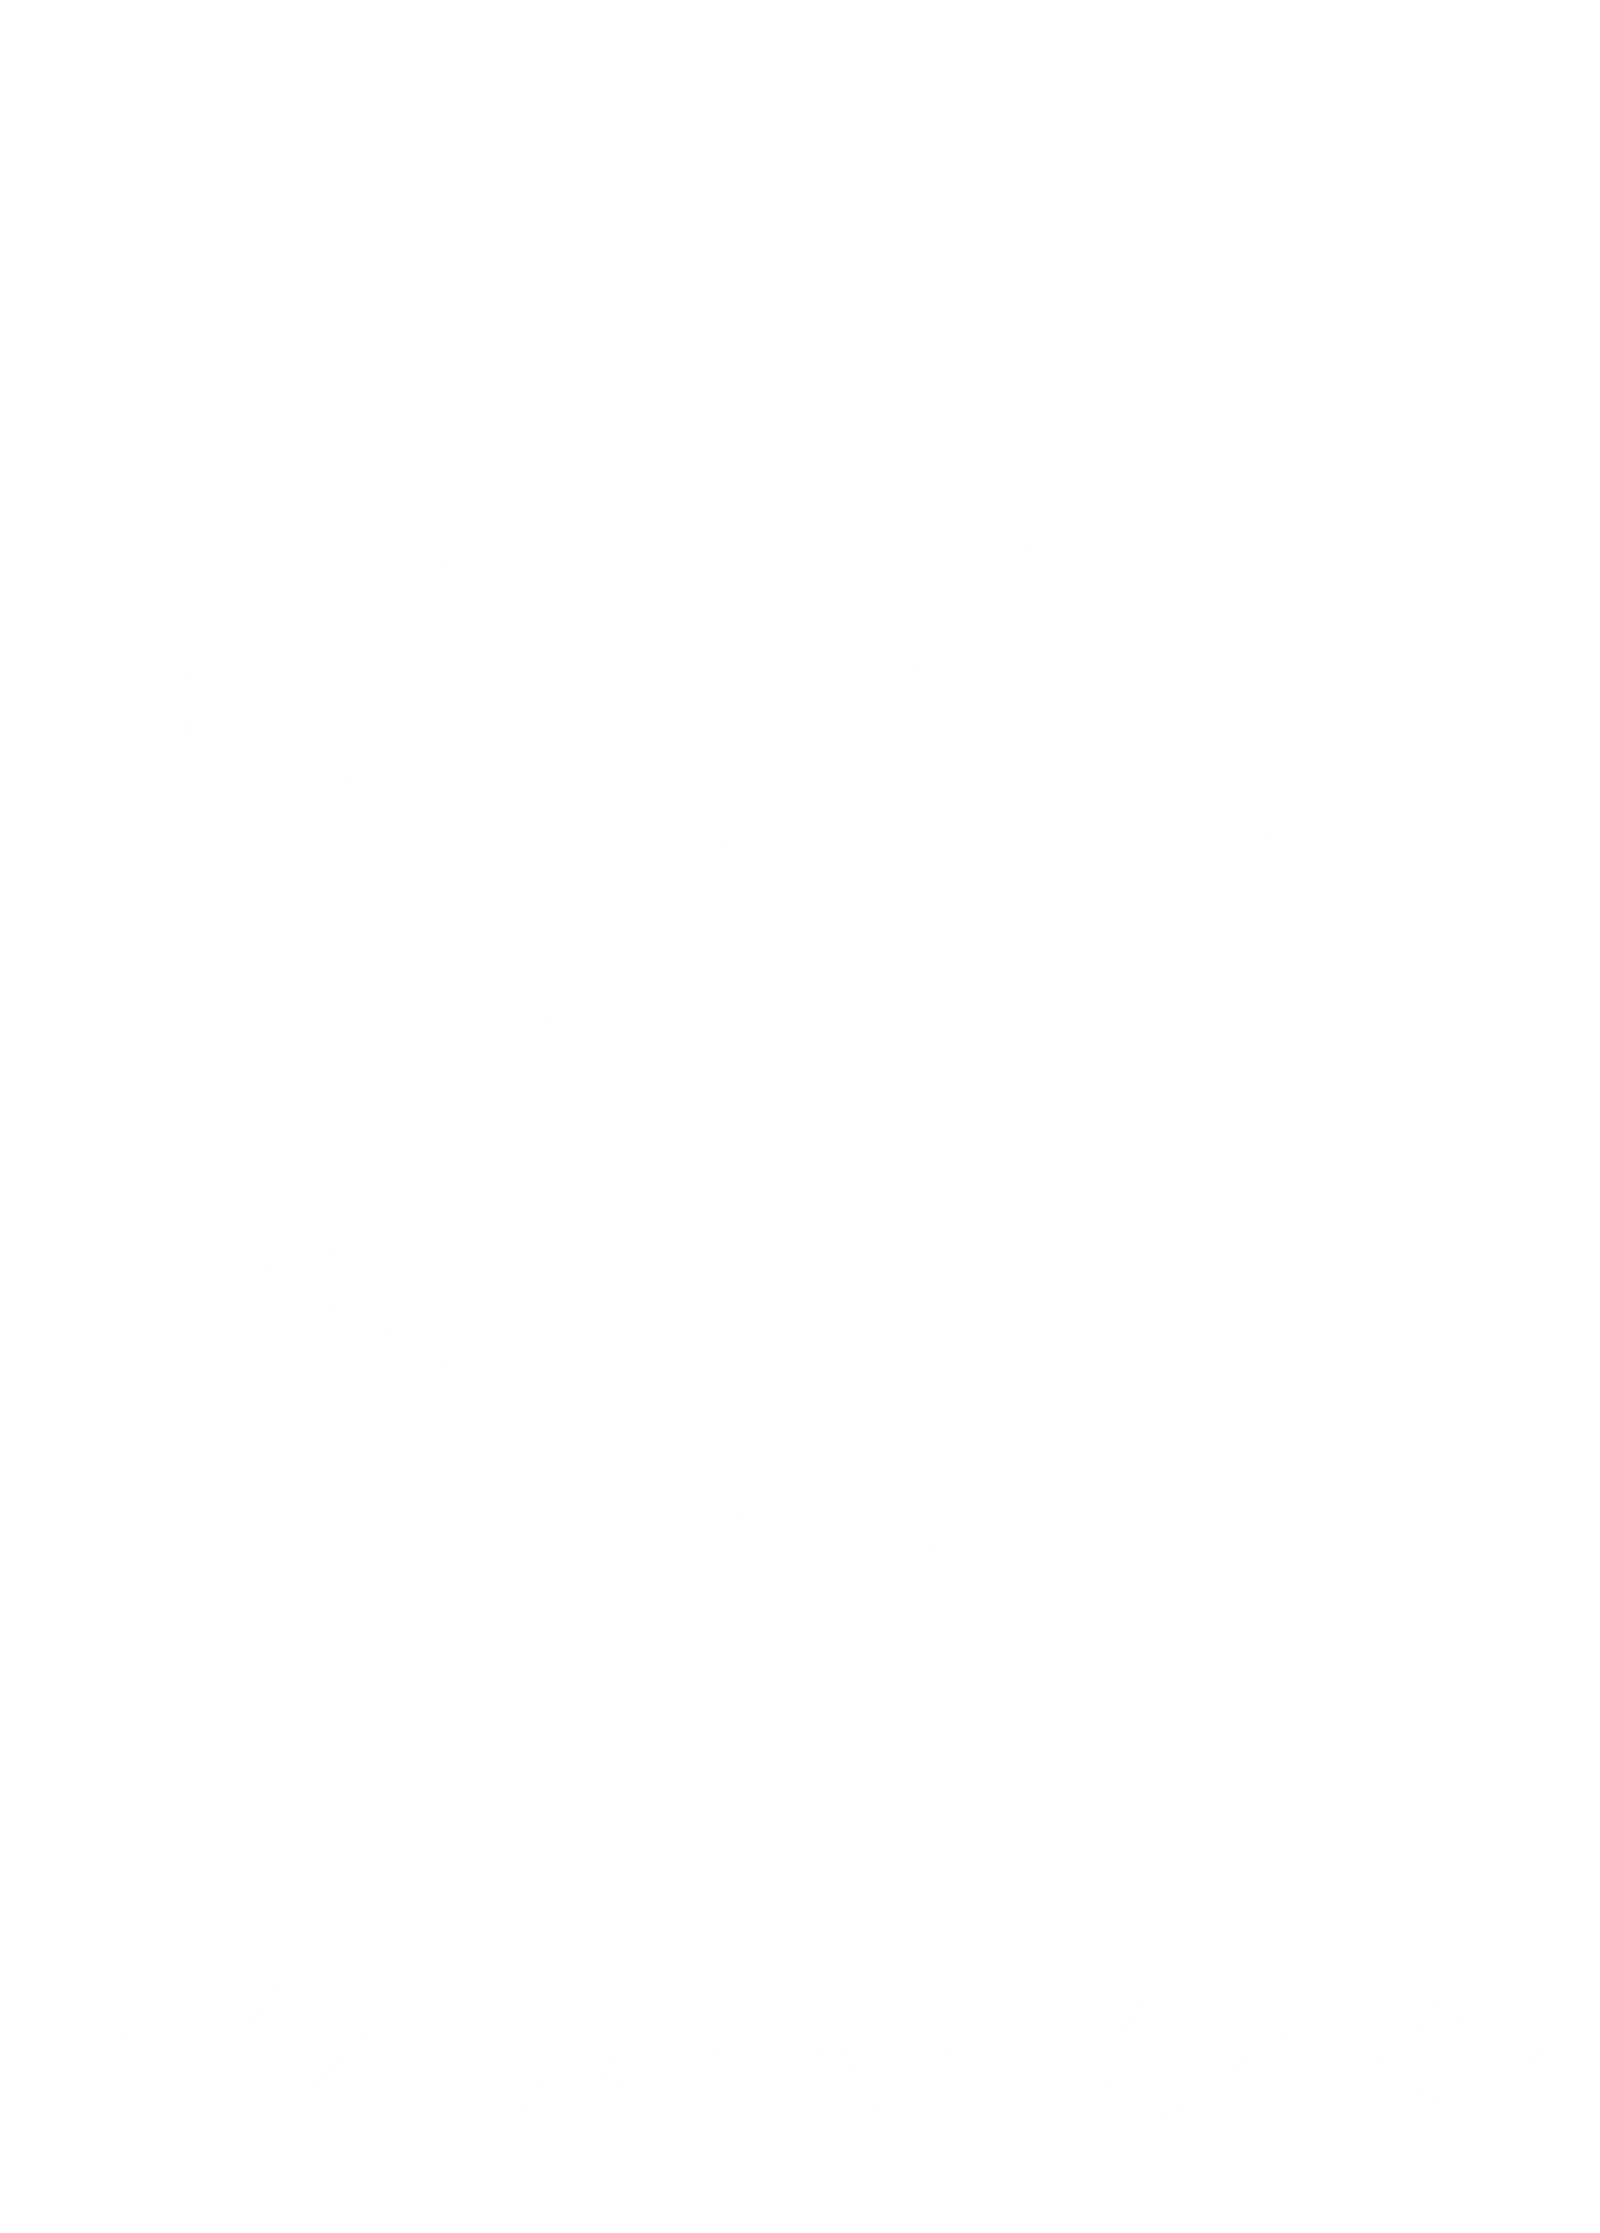 Gallery Flower Shop